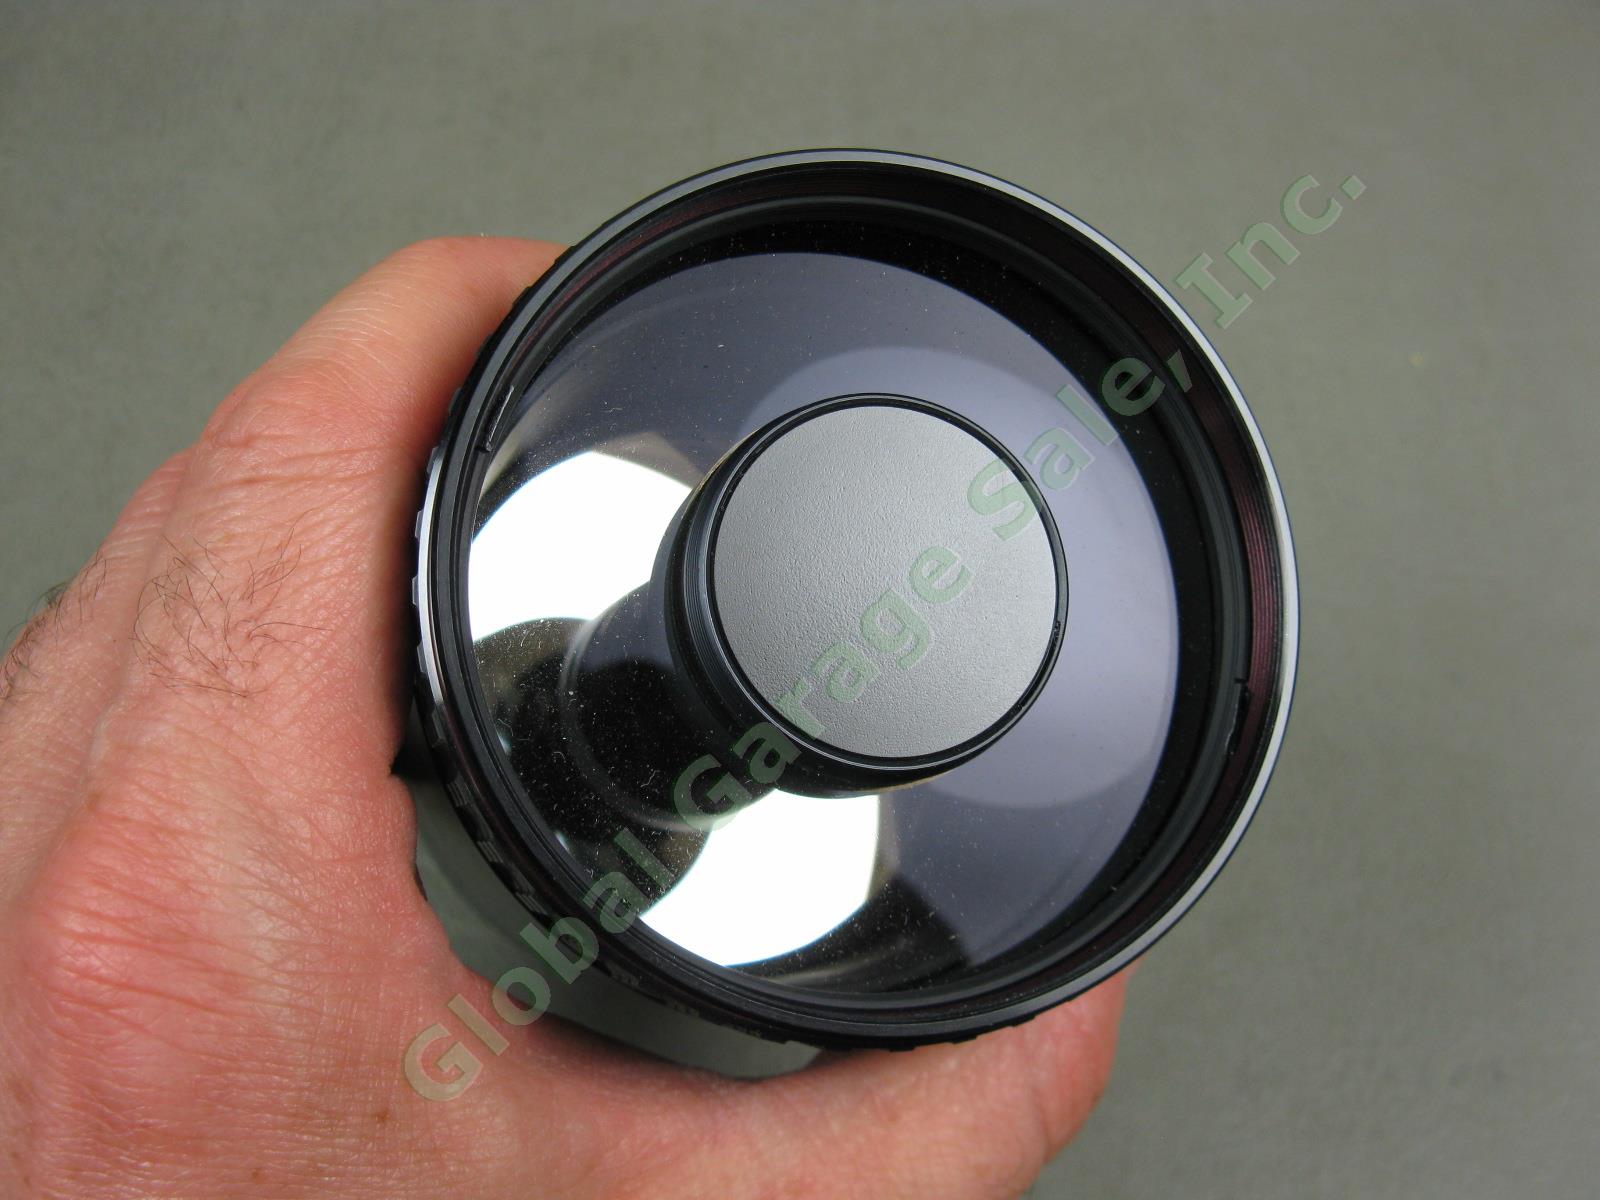 Pentax 500mm Angled Spotting Scope Telephoto Lens W/ Hood Cap Pouch Bag Bundle + 4